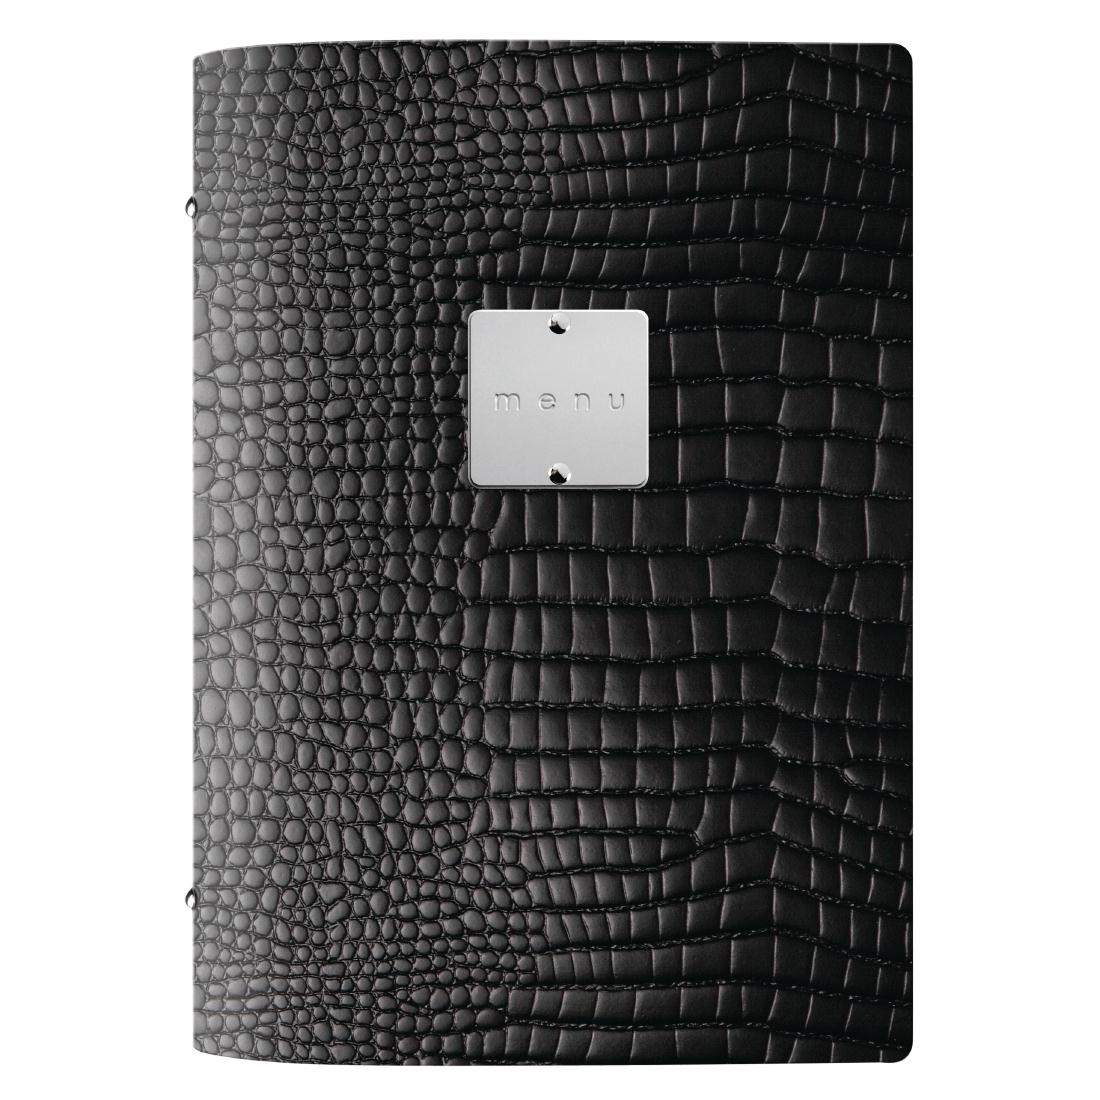 gj485_fashion-menu-holder-black